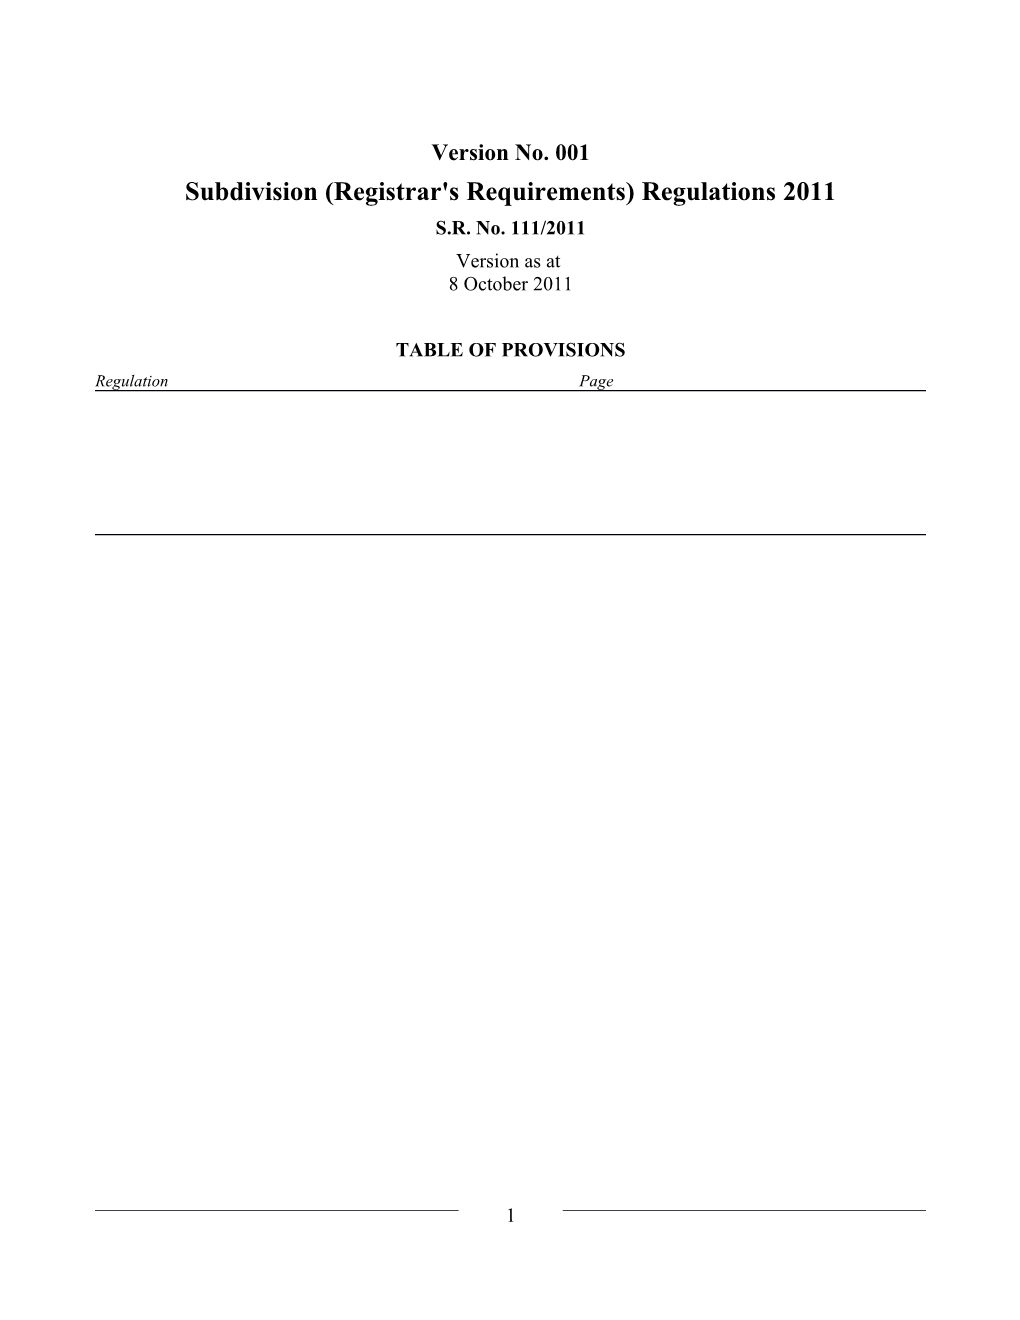 Subdivision (Registrar's Requirements) Regulations 2011